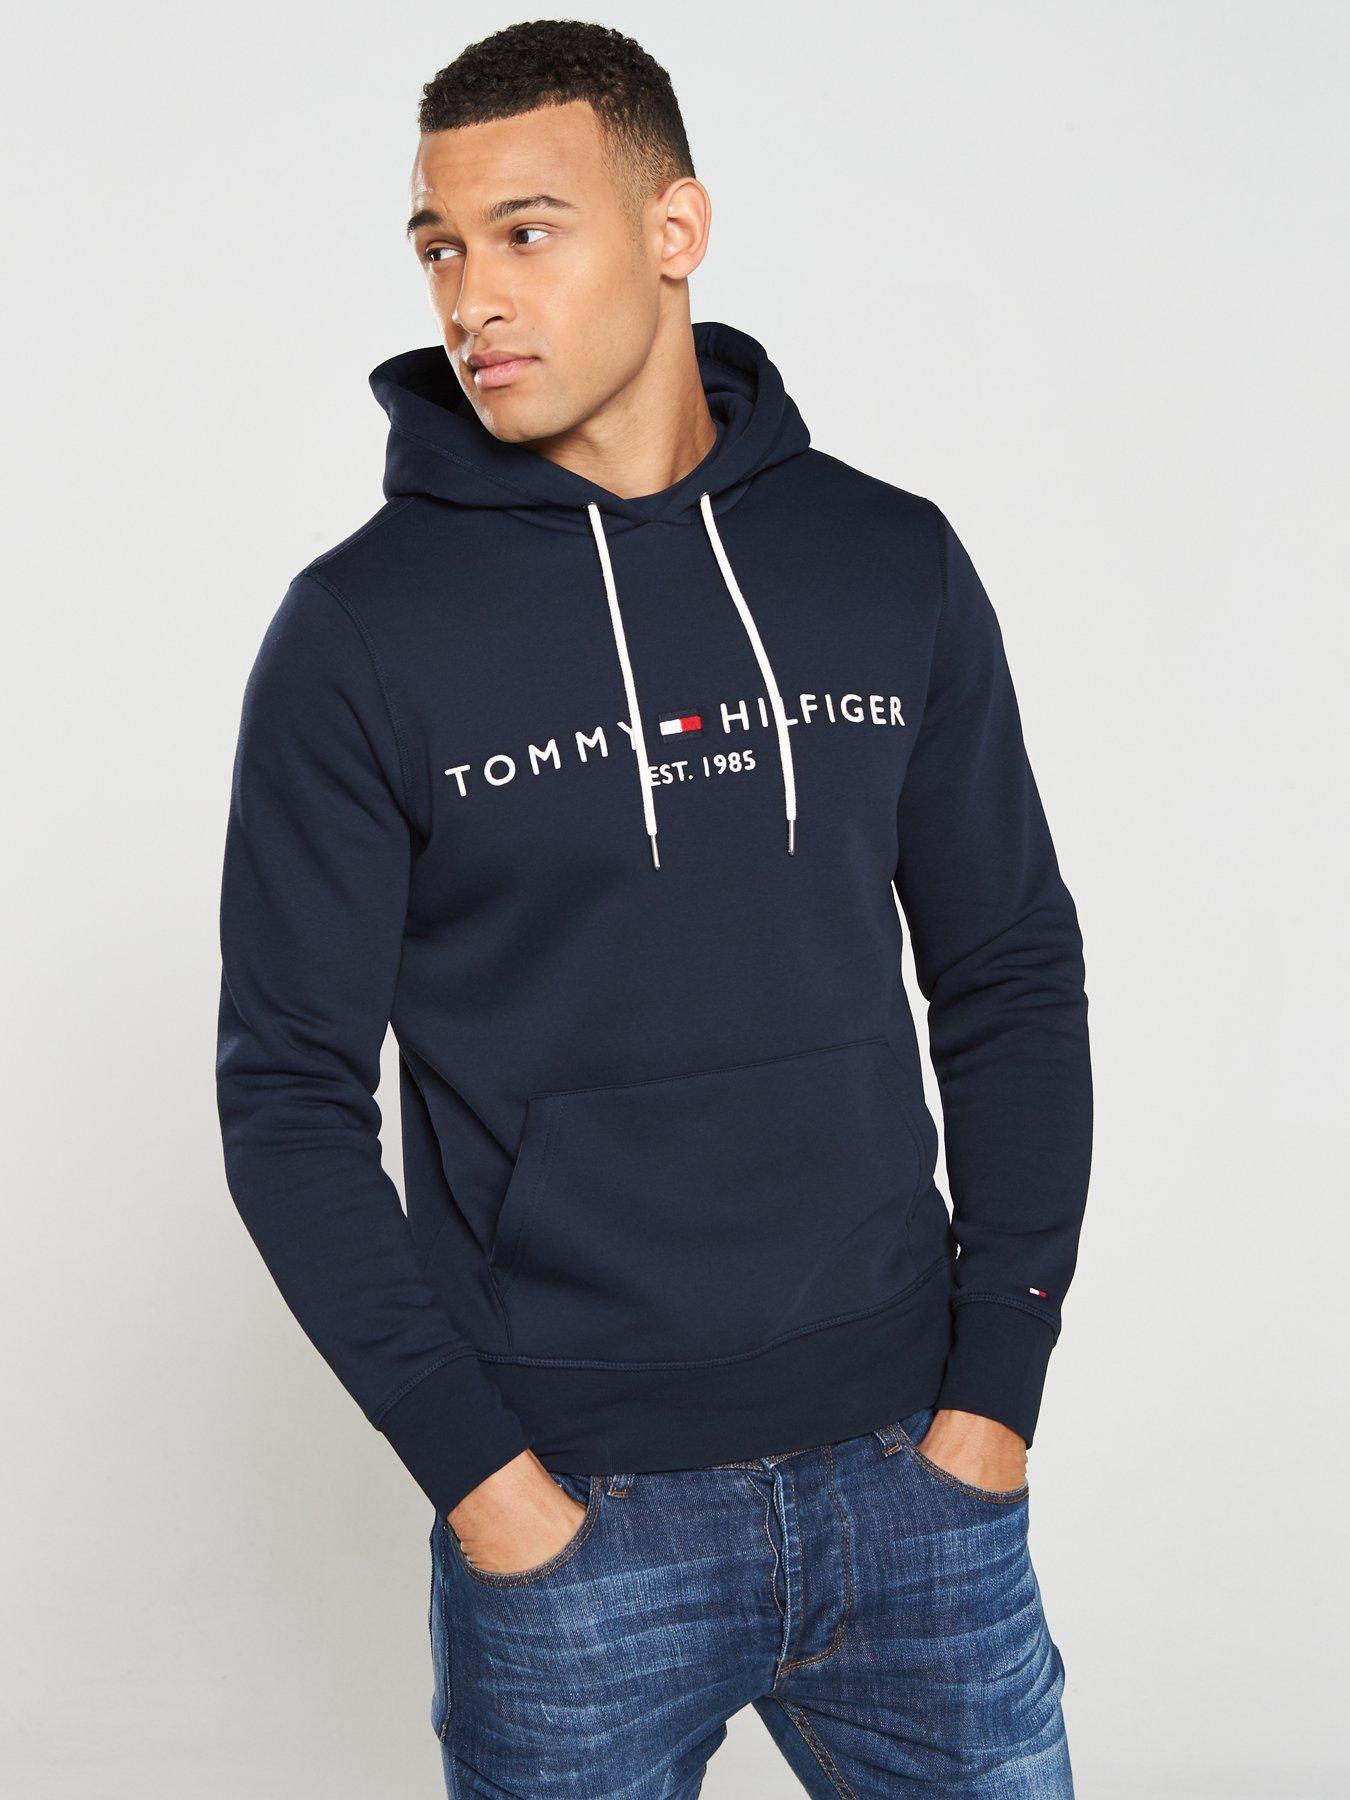 tommy hilfiger hoodie navy blue